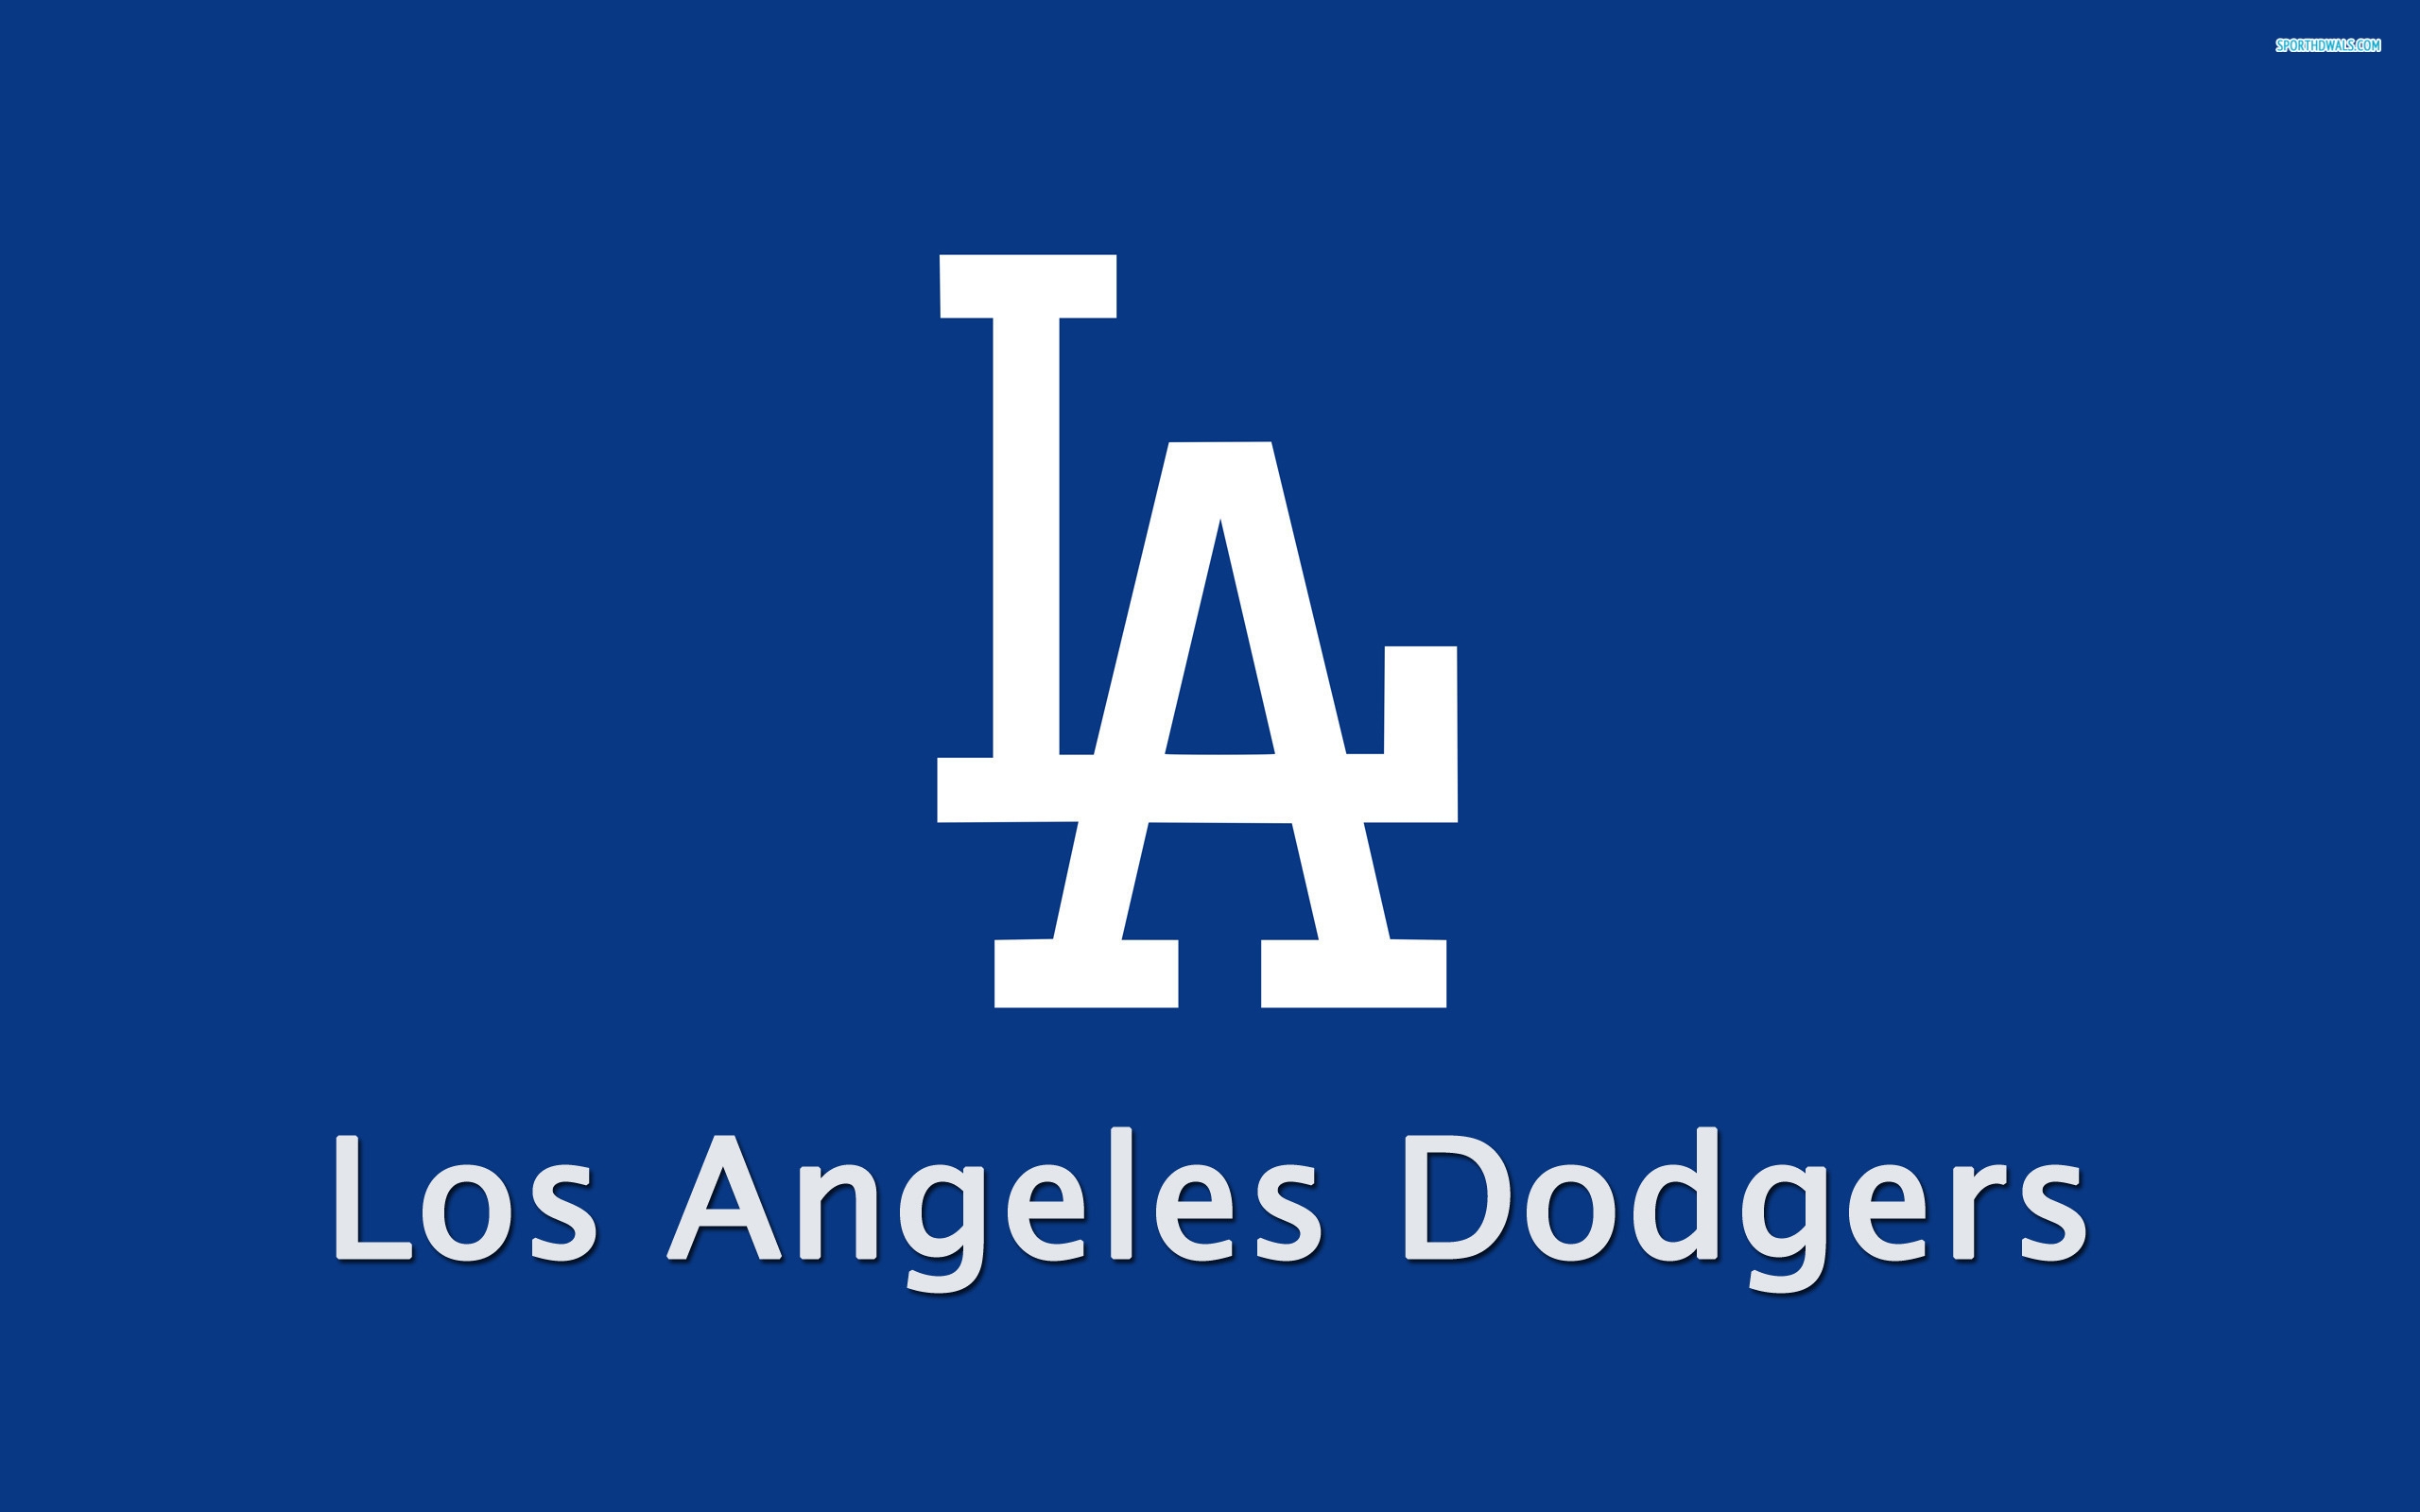 Los Angeles Dodgers Baseball Mlb Tt Wallpapers Hd Desktop And Mobile Backgrounds